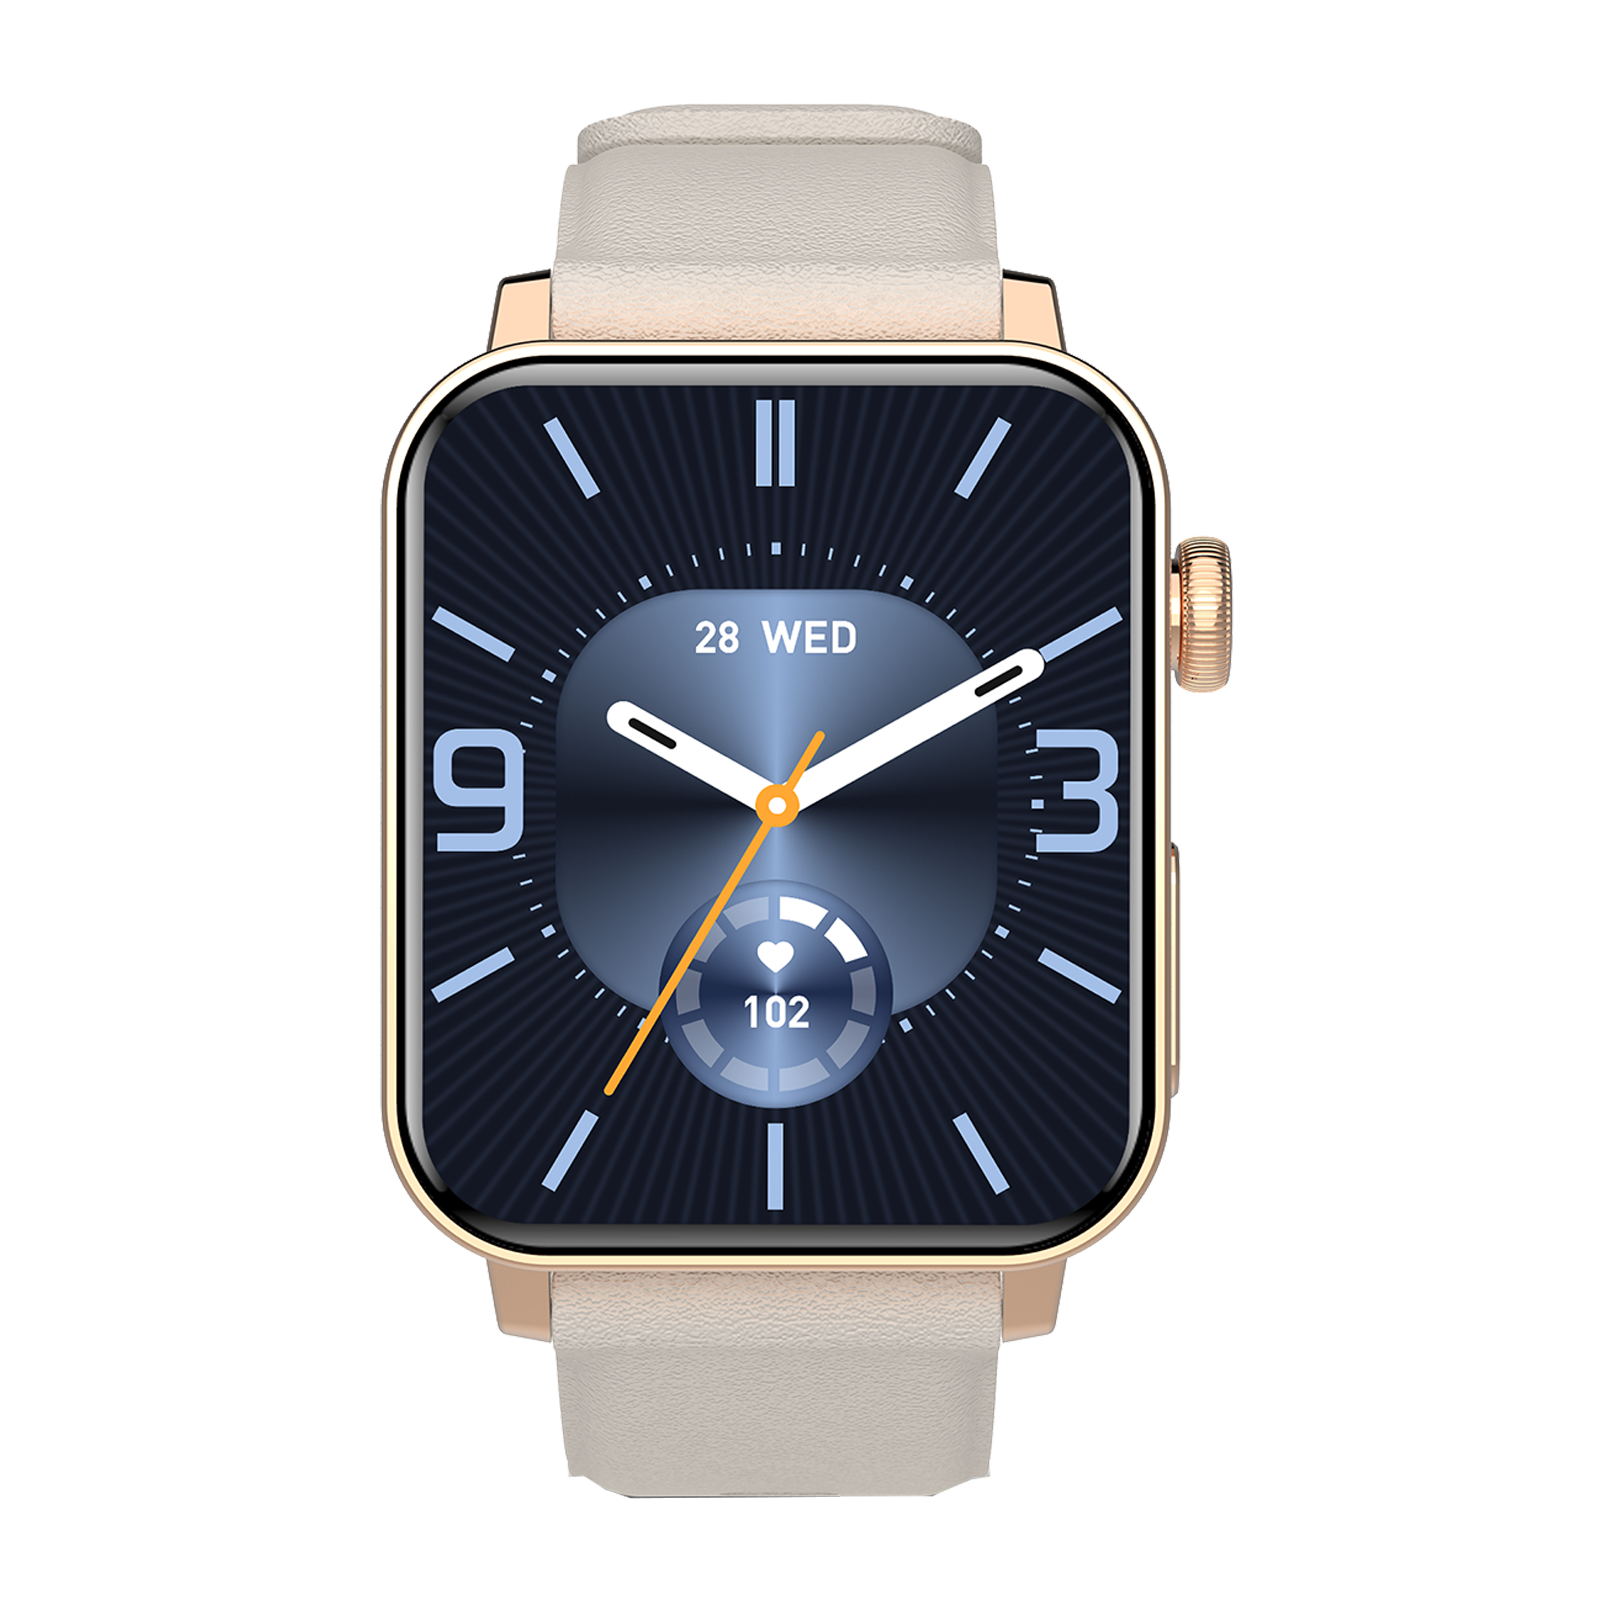 apple watch on discount croma offers discount on all new apple watch models  - Tech news hindi - Apple Watch पर पूरे 5,500 रुपये तक की छूट; सभी नए  मॉडल्स पर गजब